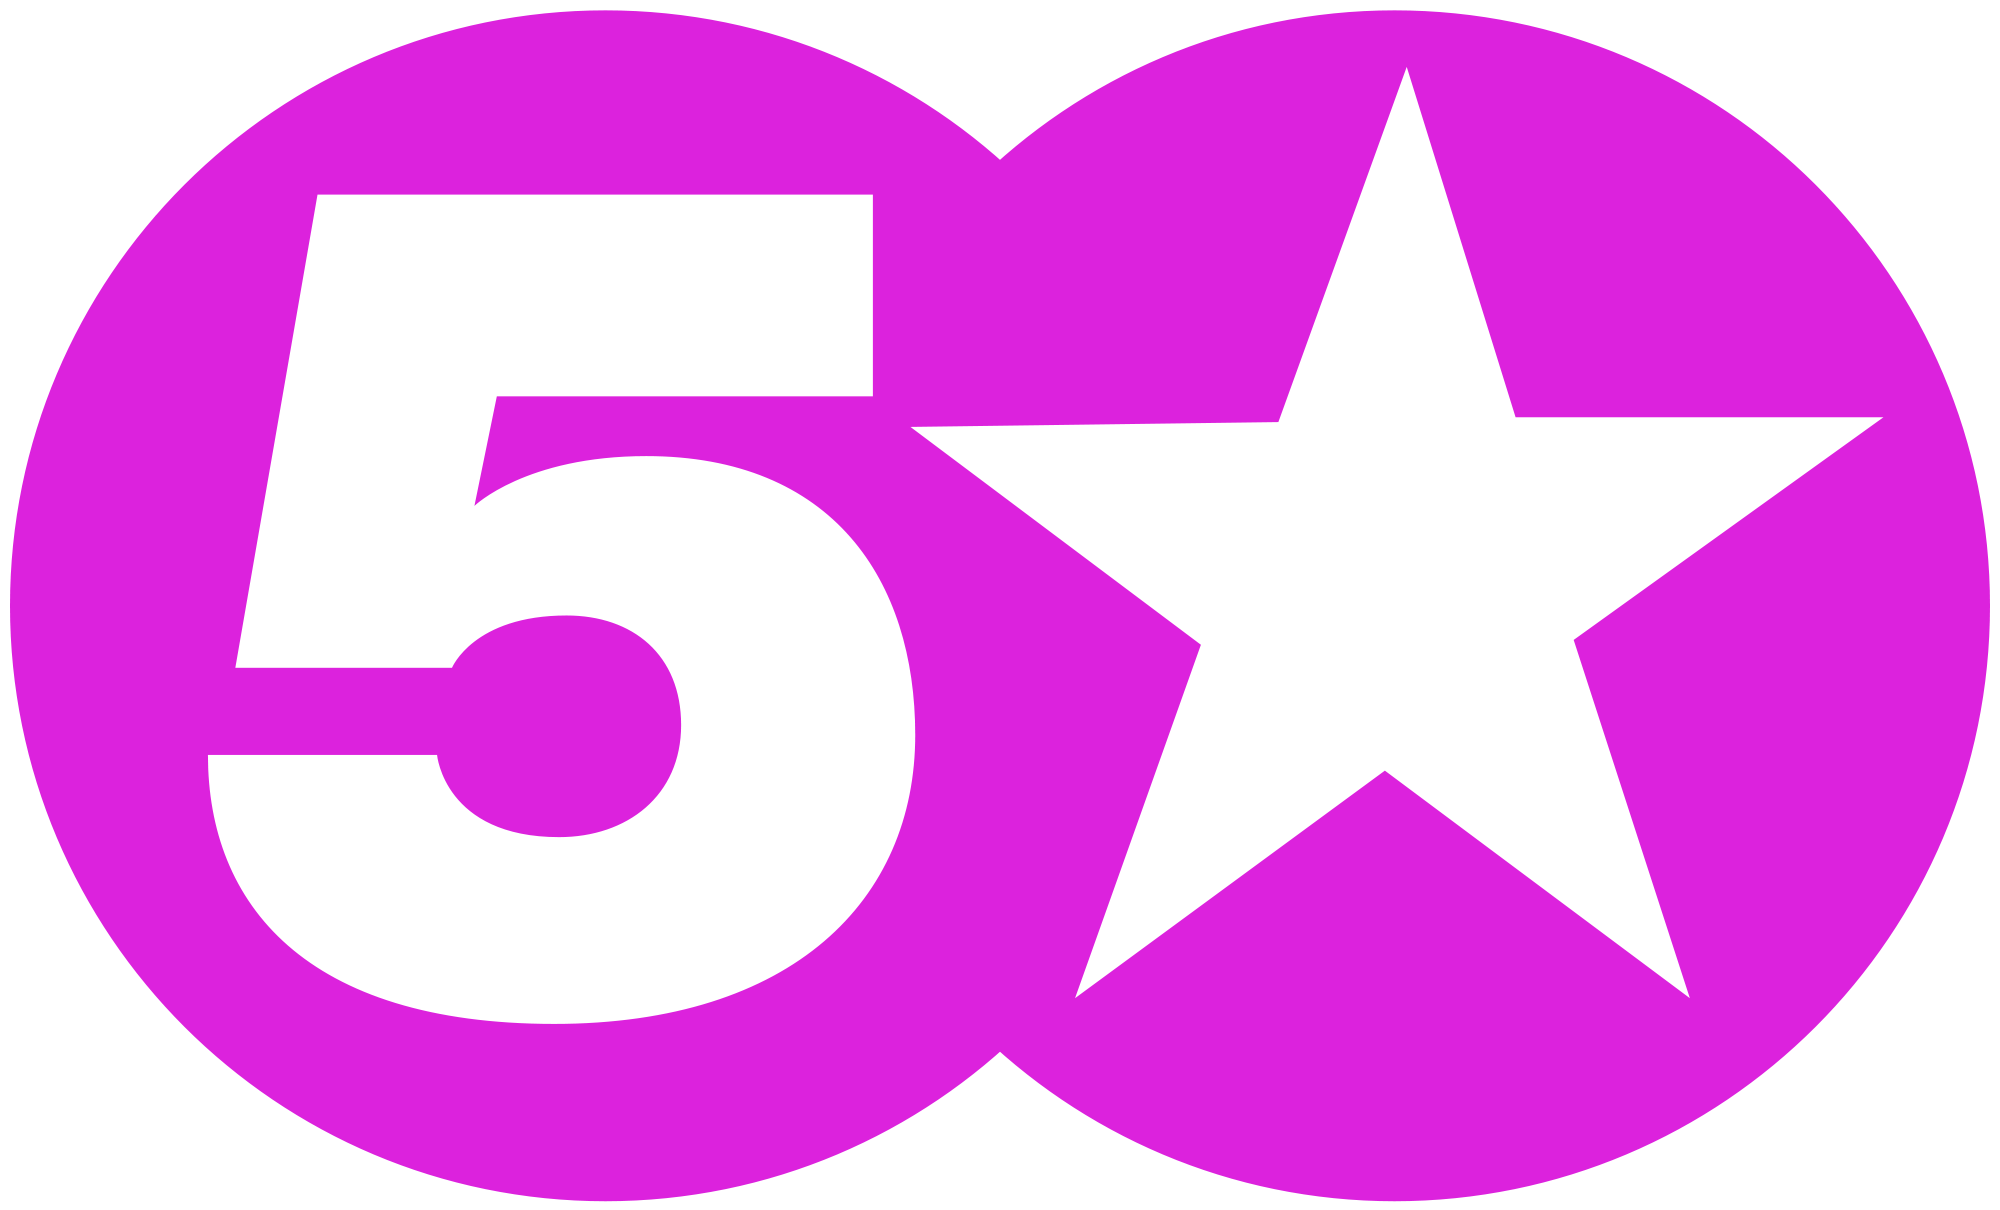 Логотип звезда. 5 Звезд логотип. 5 Звезд картинка. Значок канала Star TV. Get star 5